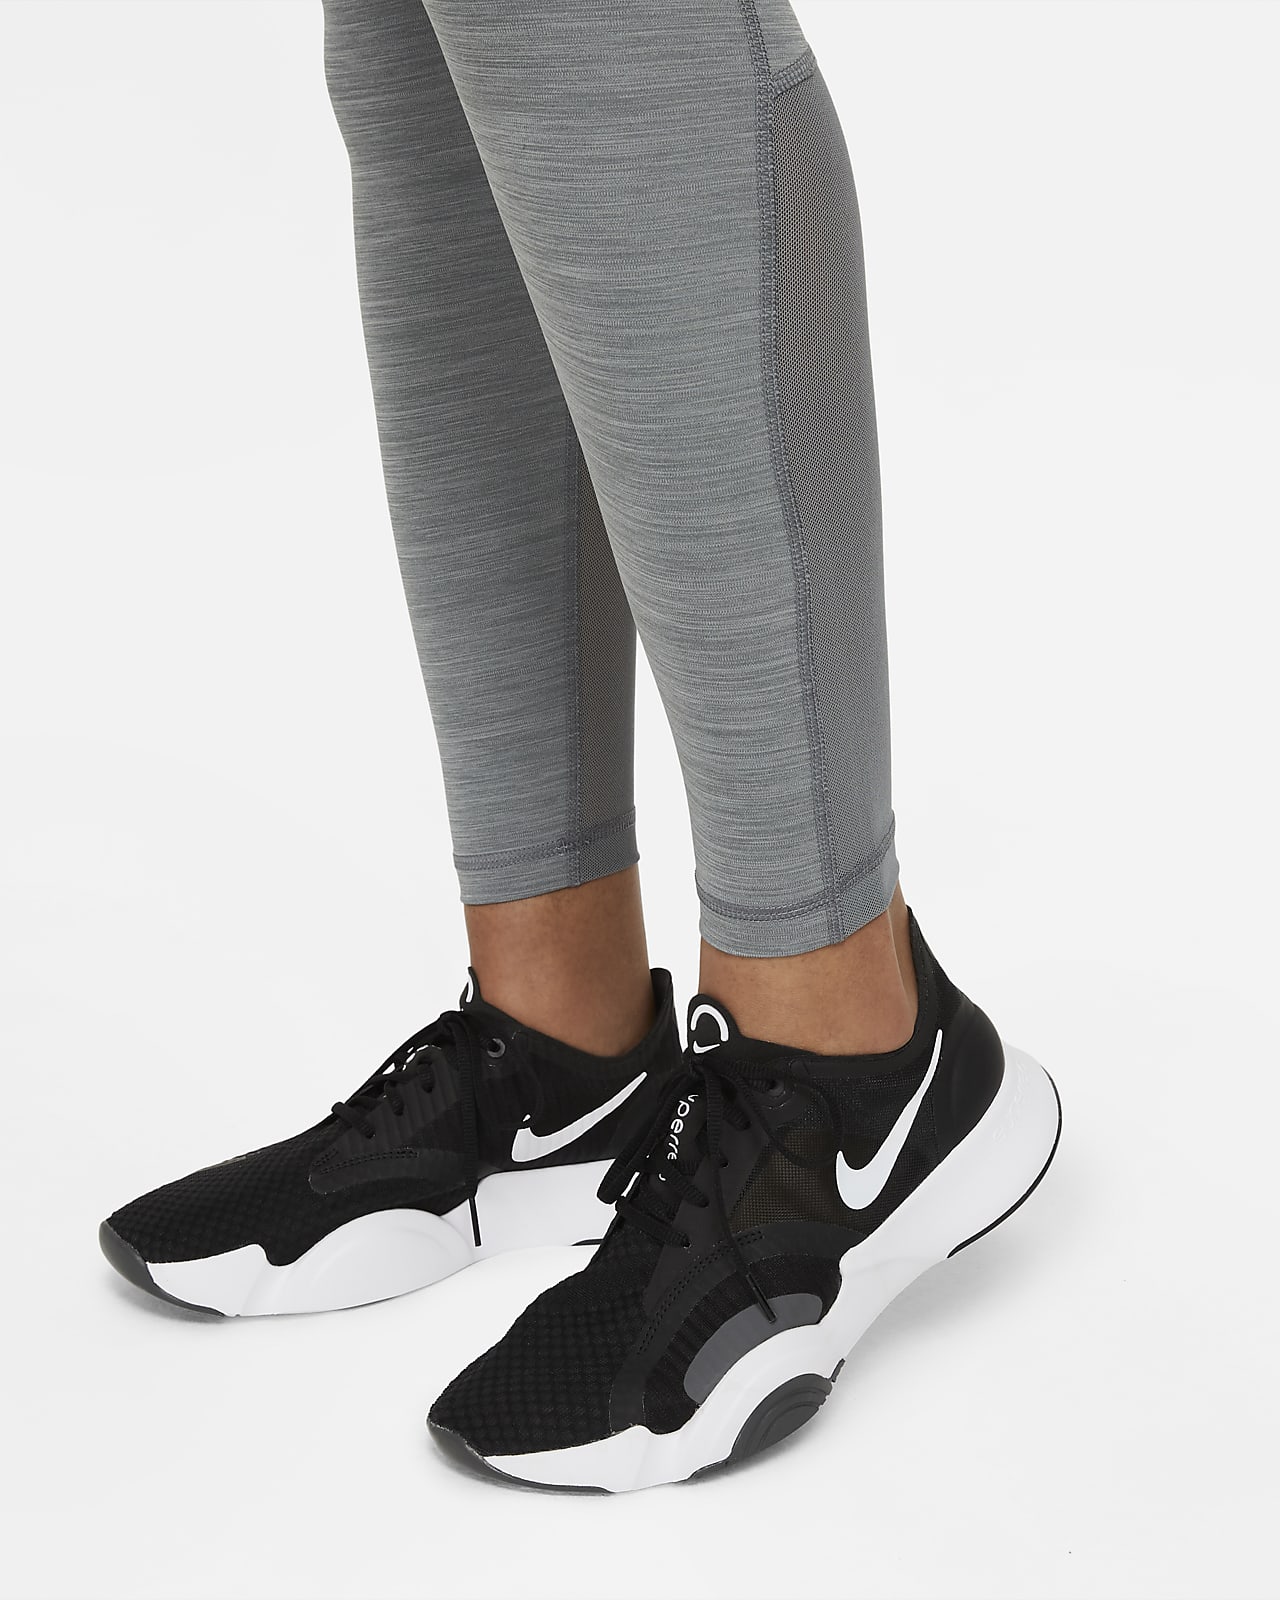 Nike Training Power Leggings With Mesh Panel Inserts - ShopperBoard